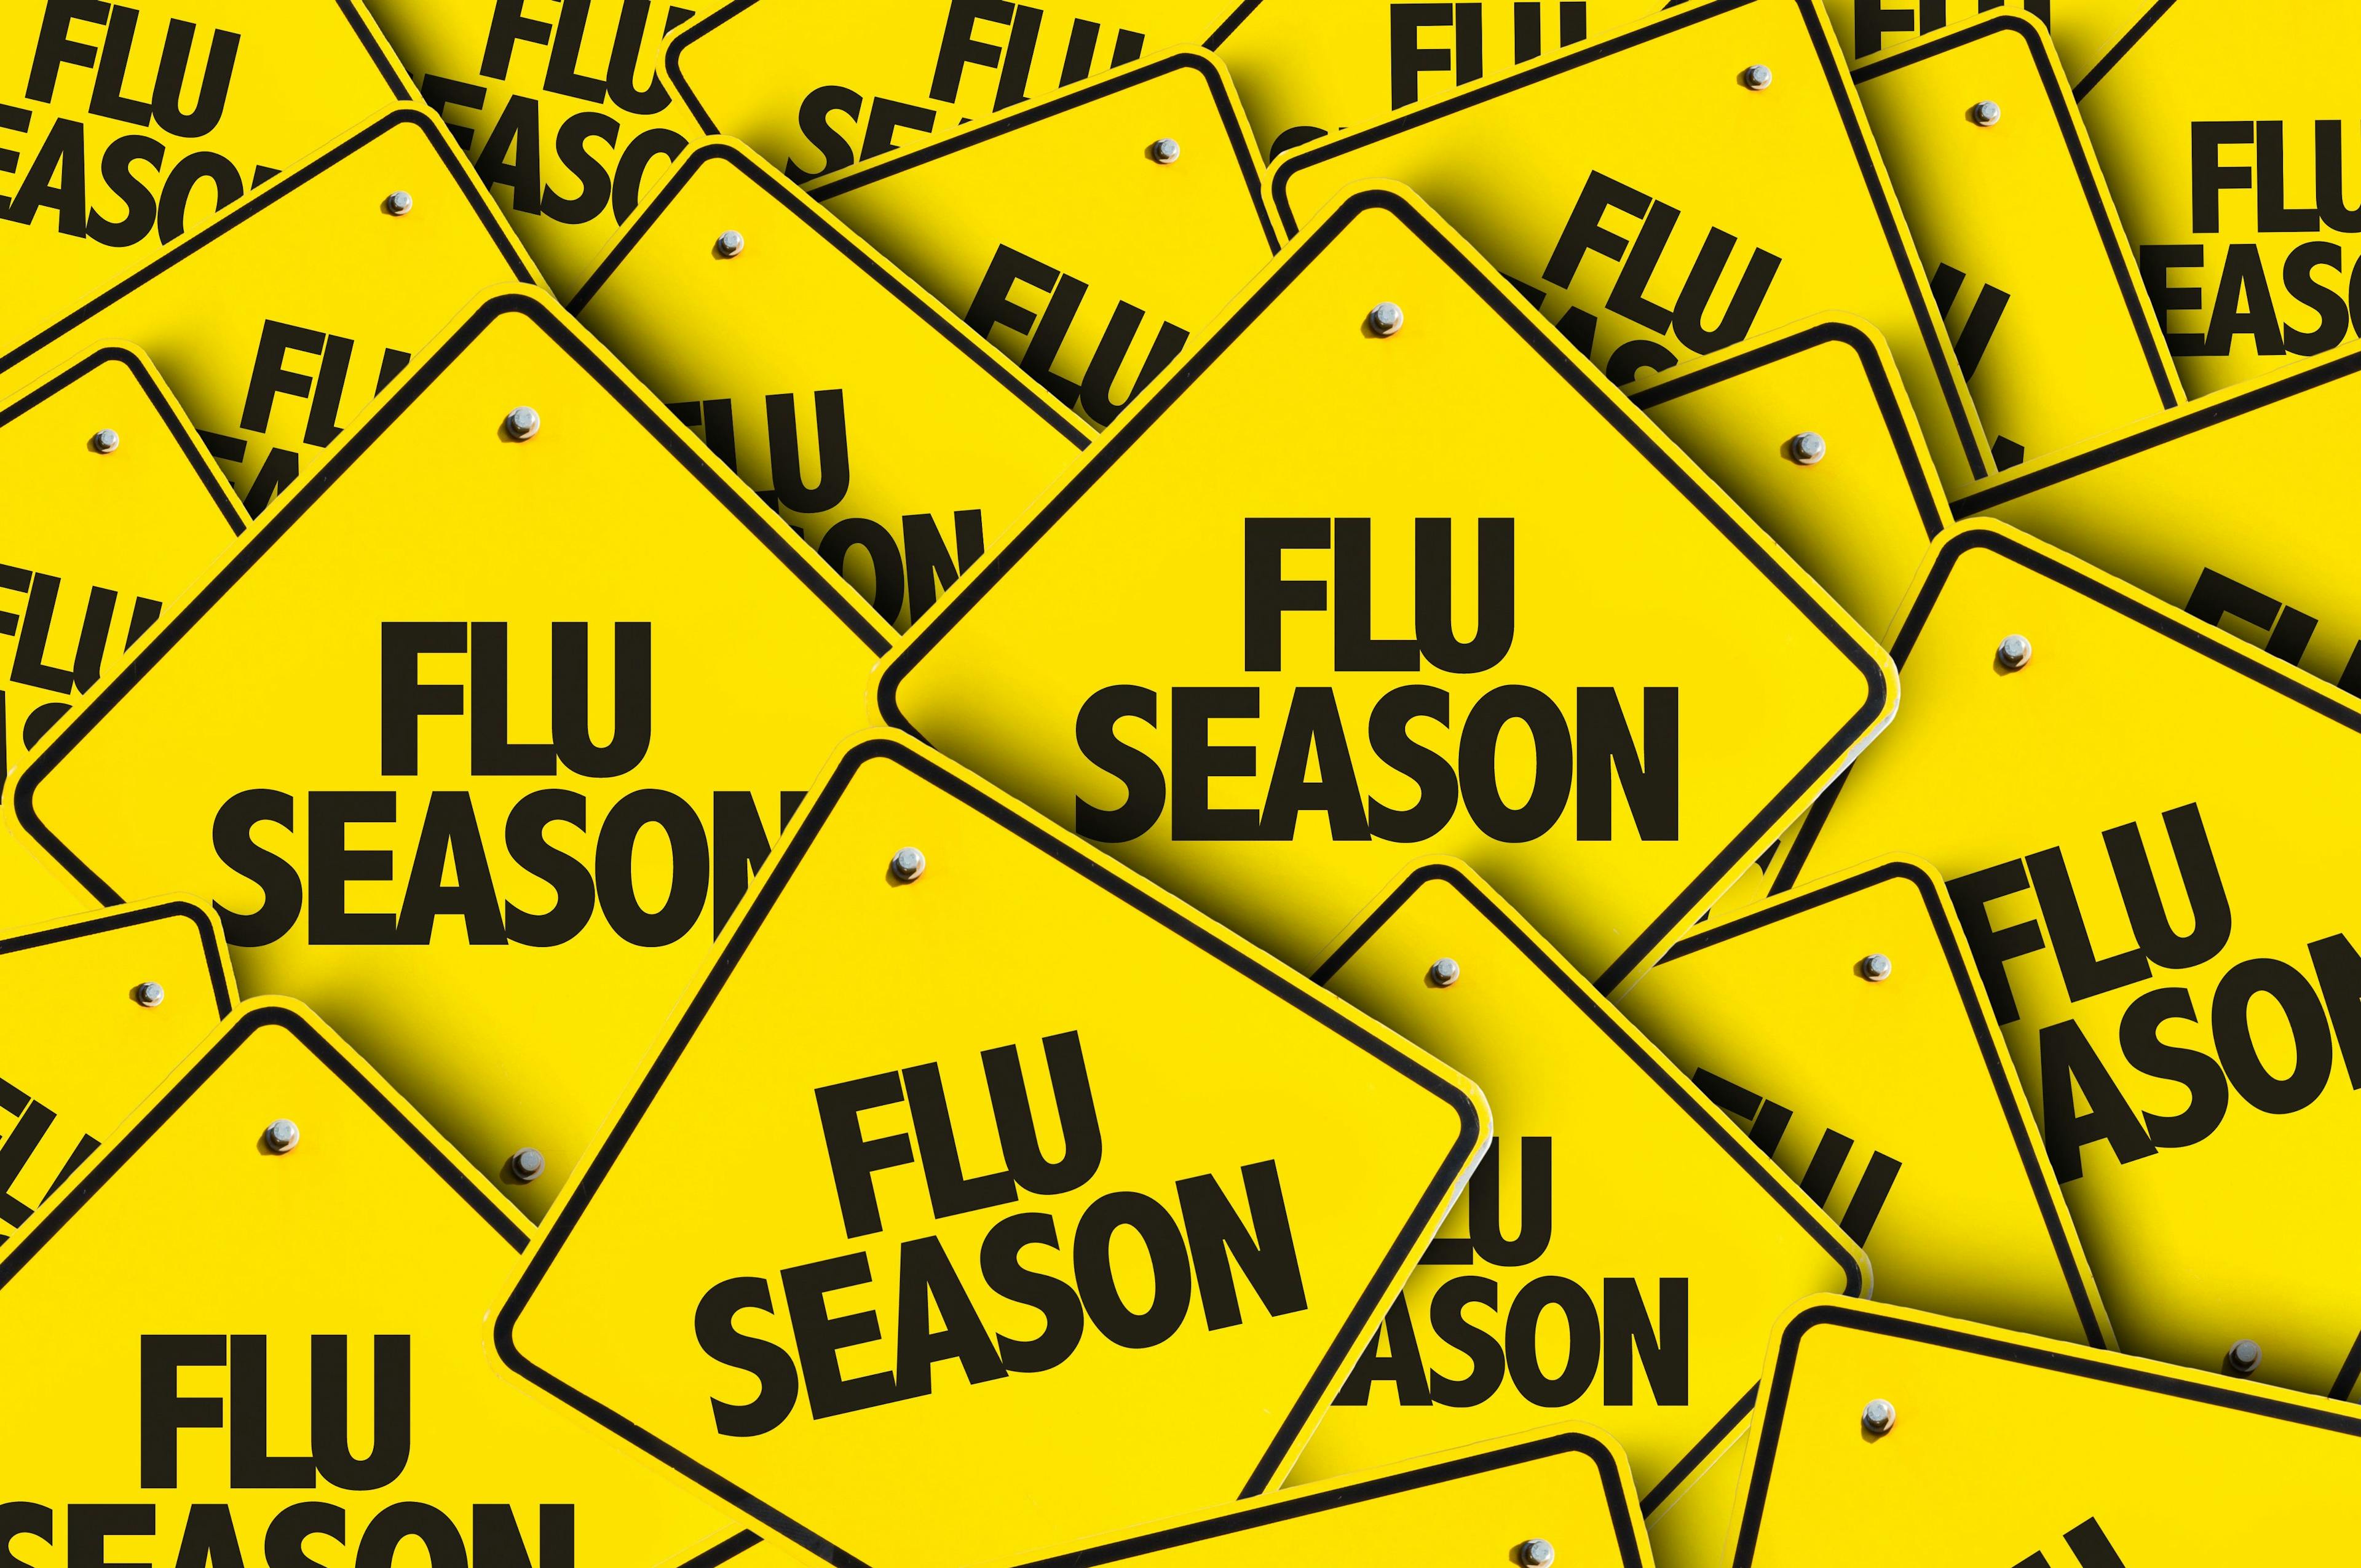 Influenza B leading the charge in 2020 flu season